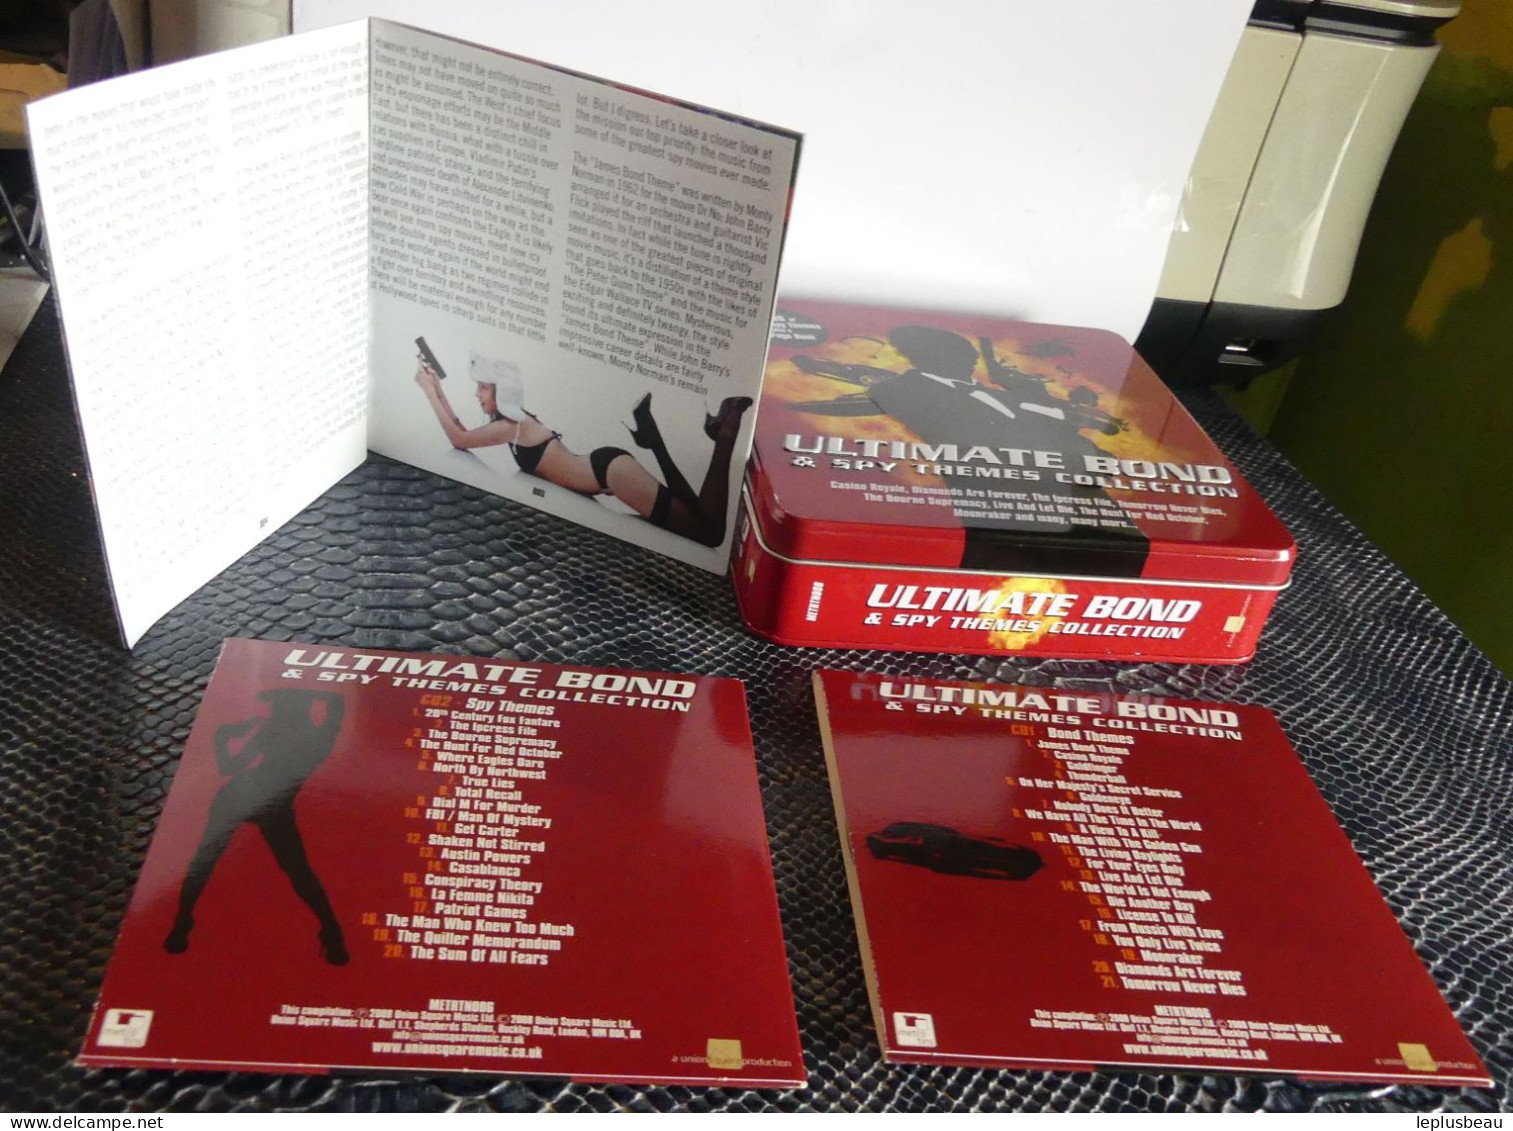 Coffret 2 CD James Bond - Soundtracks, Film Music